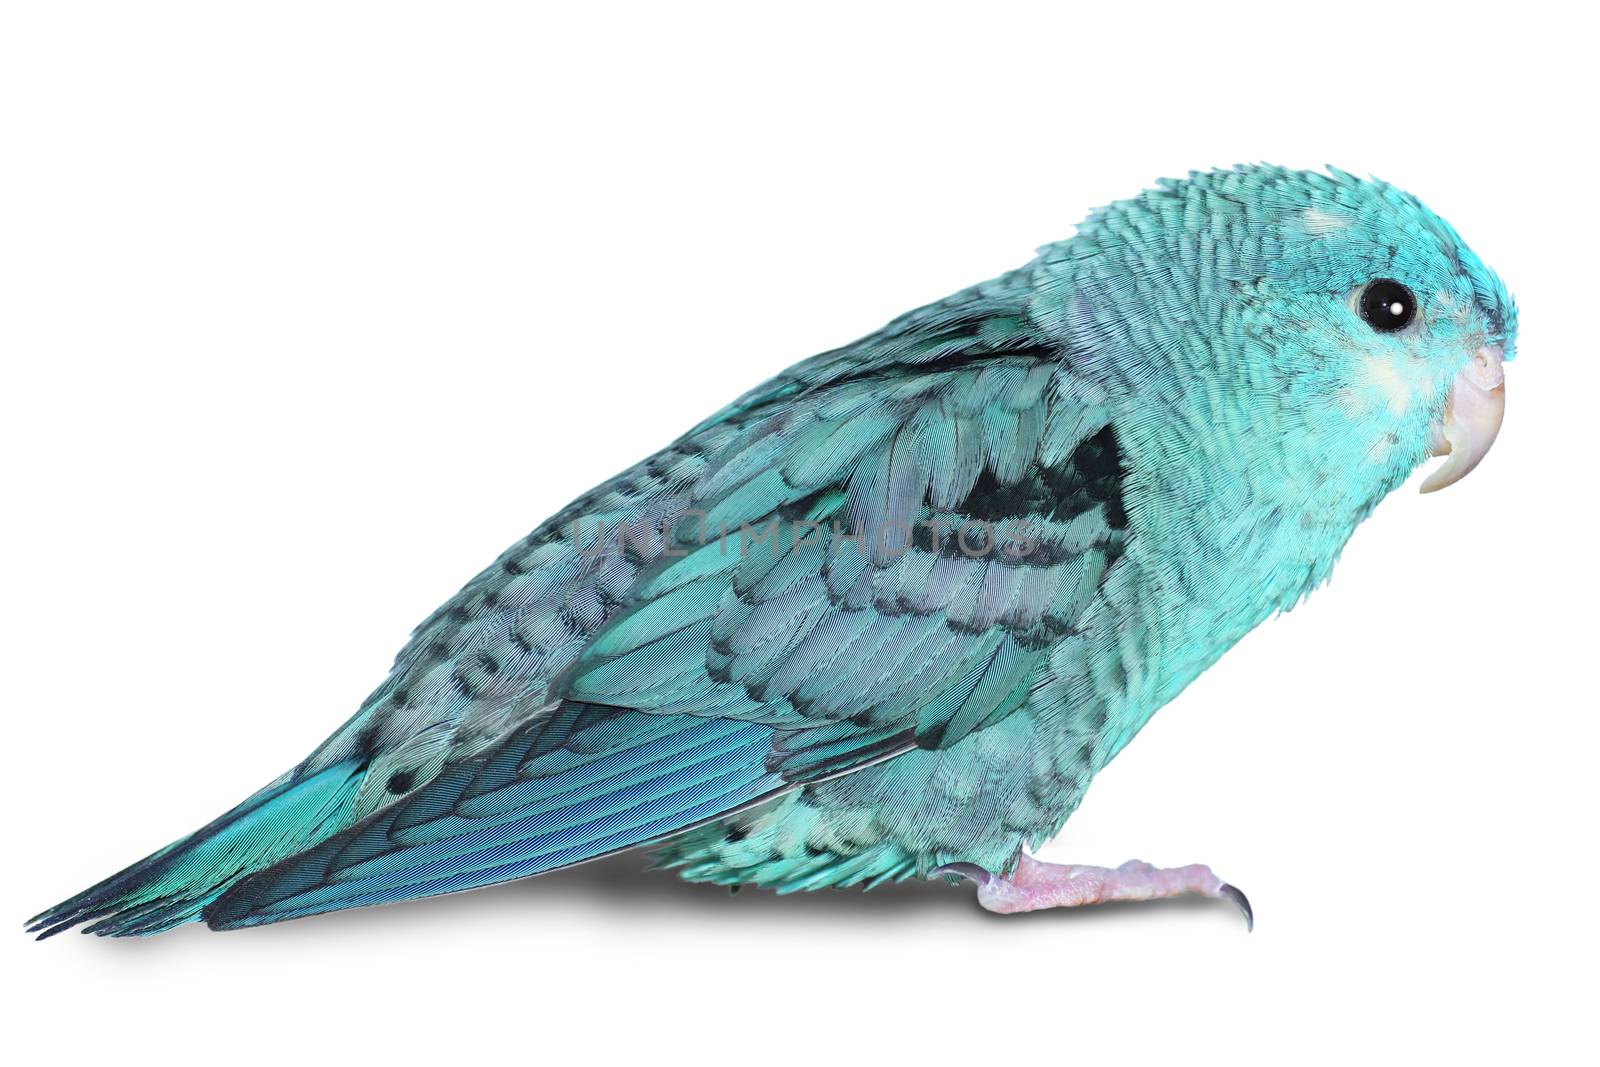 Female lineolated parakeet, Bolborhyncus lineola, blue form, isolated